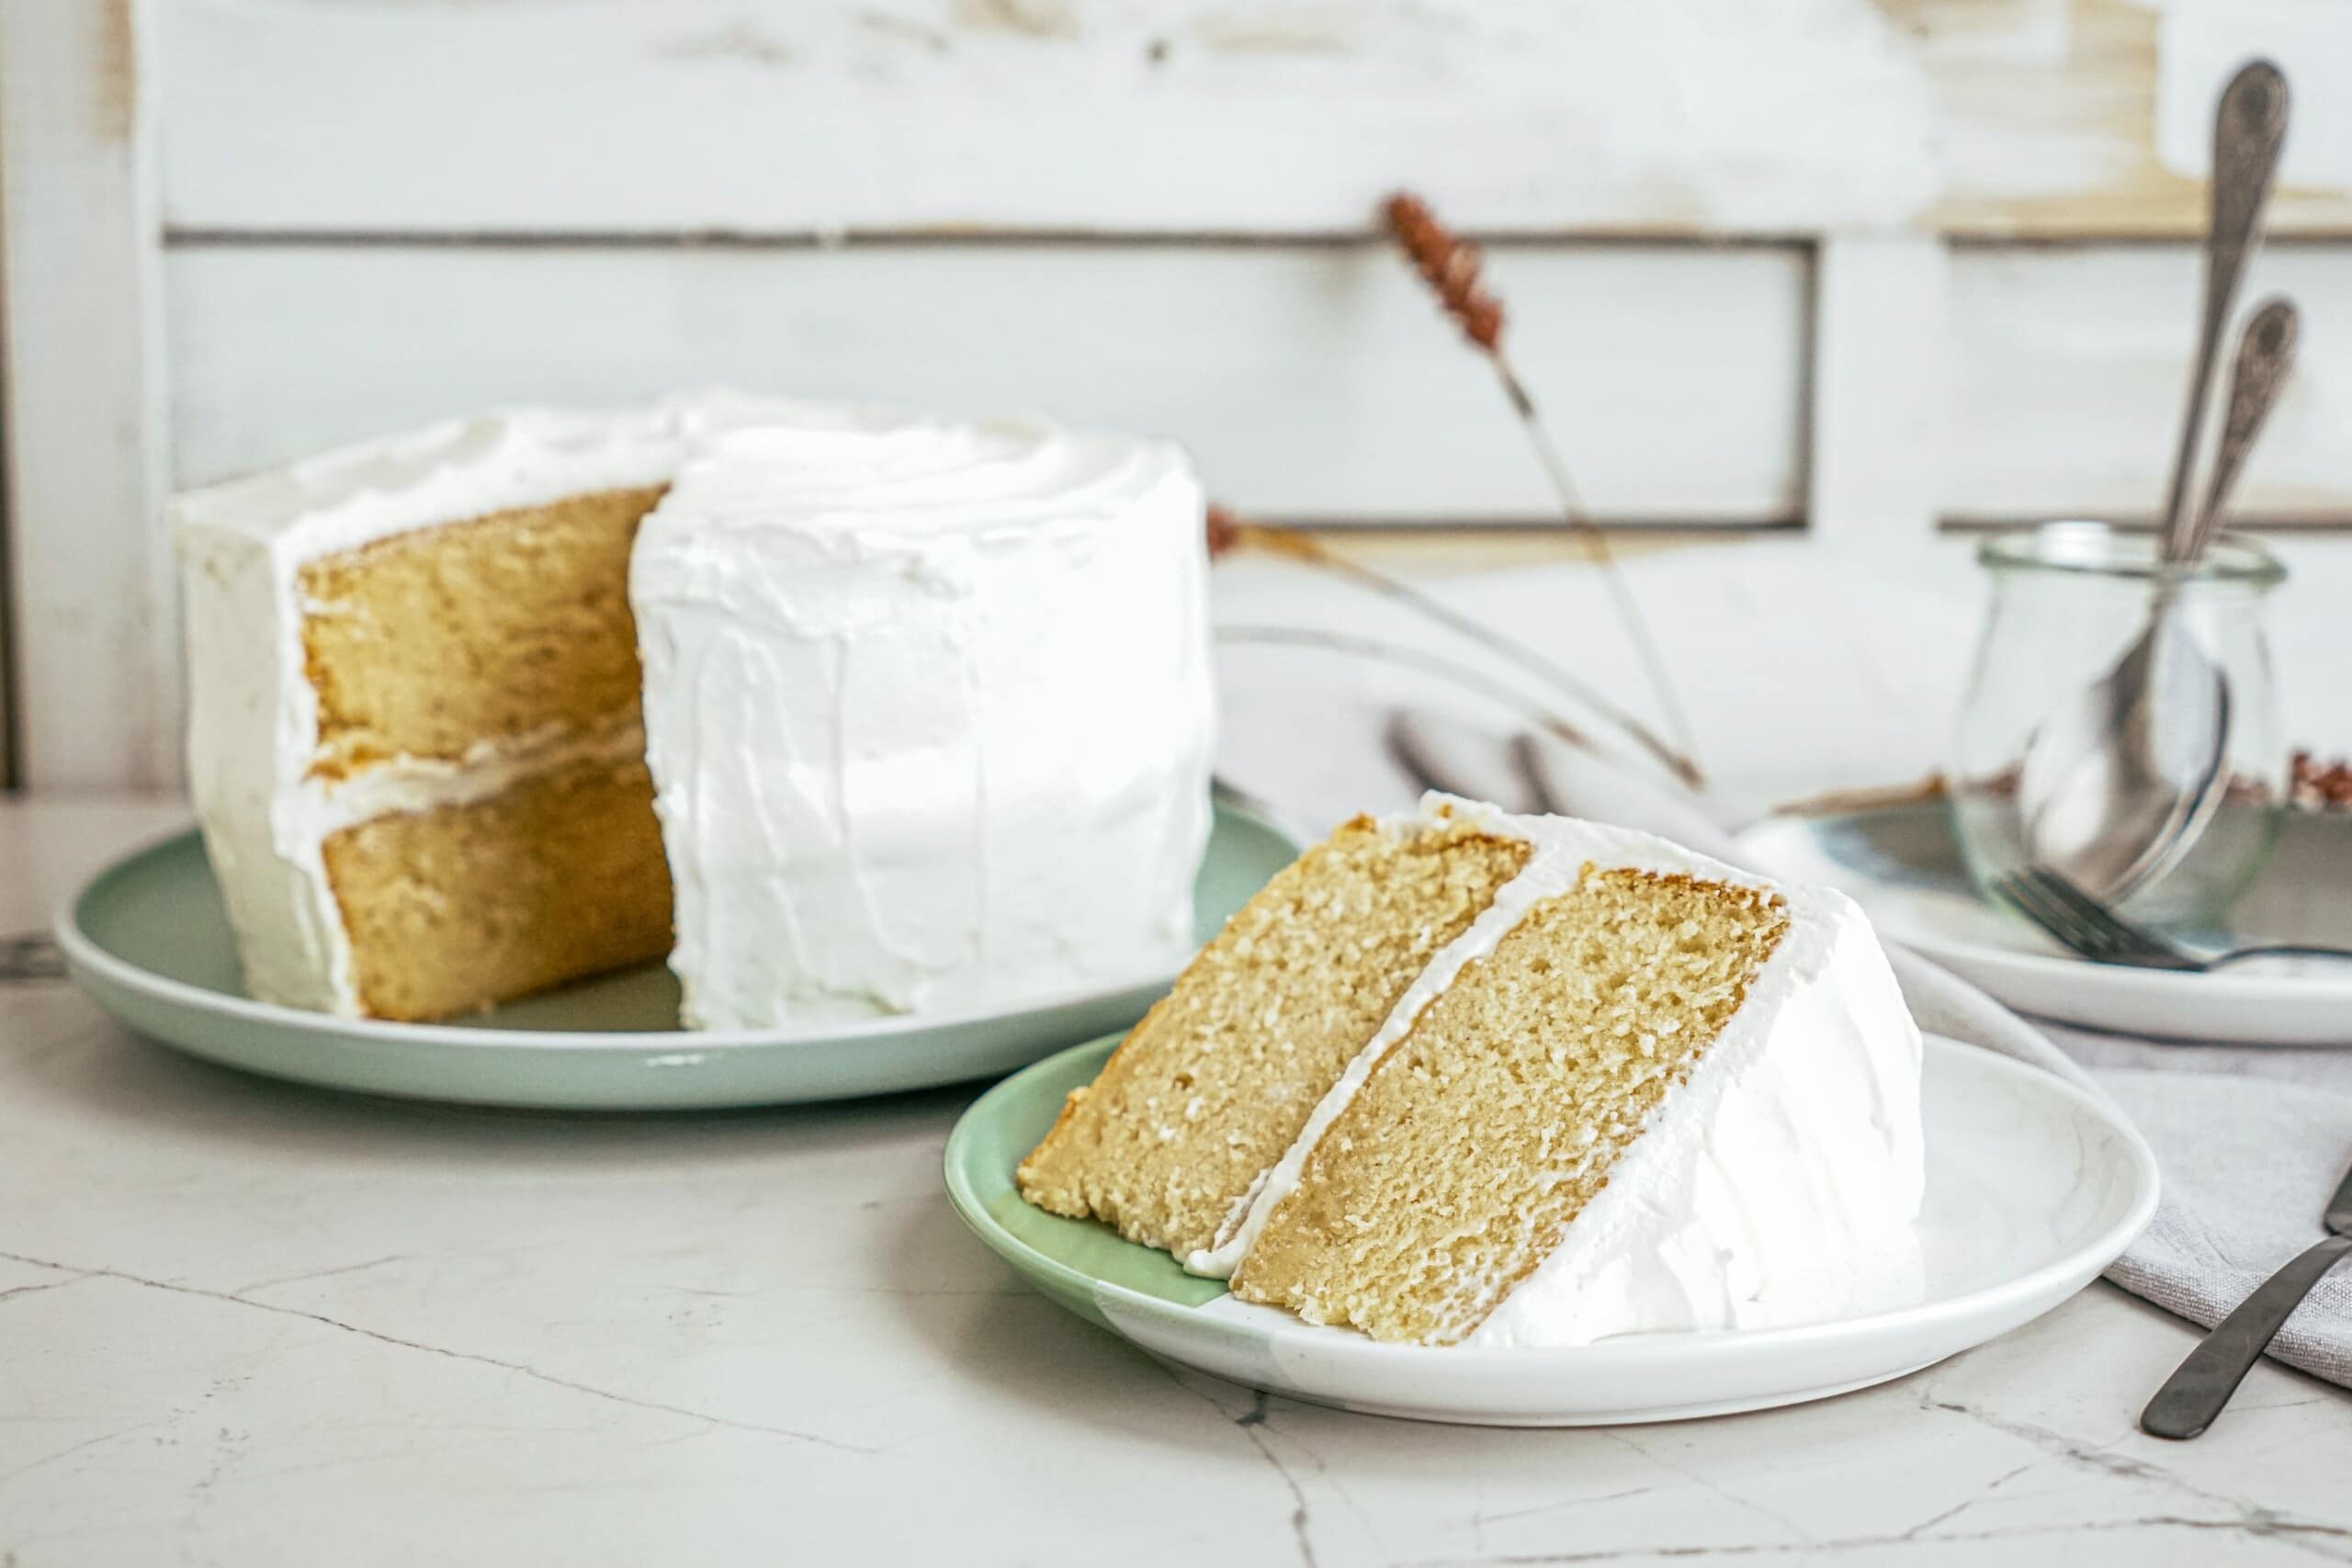 Details more than 63 laurens latest vanilla cake latest